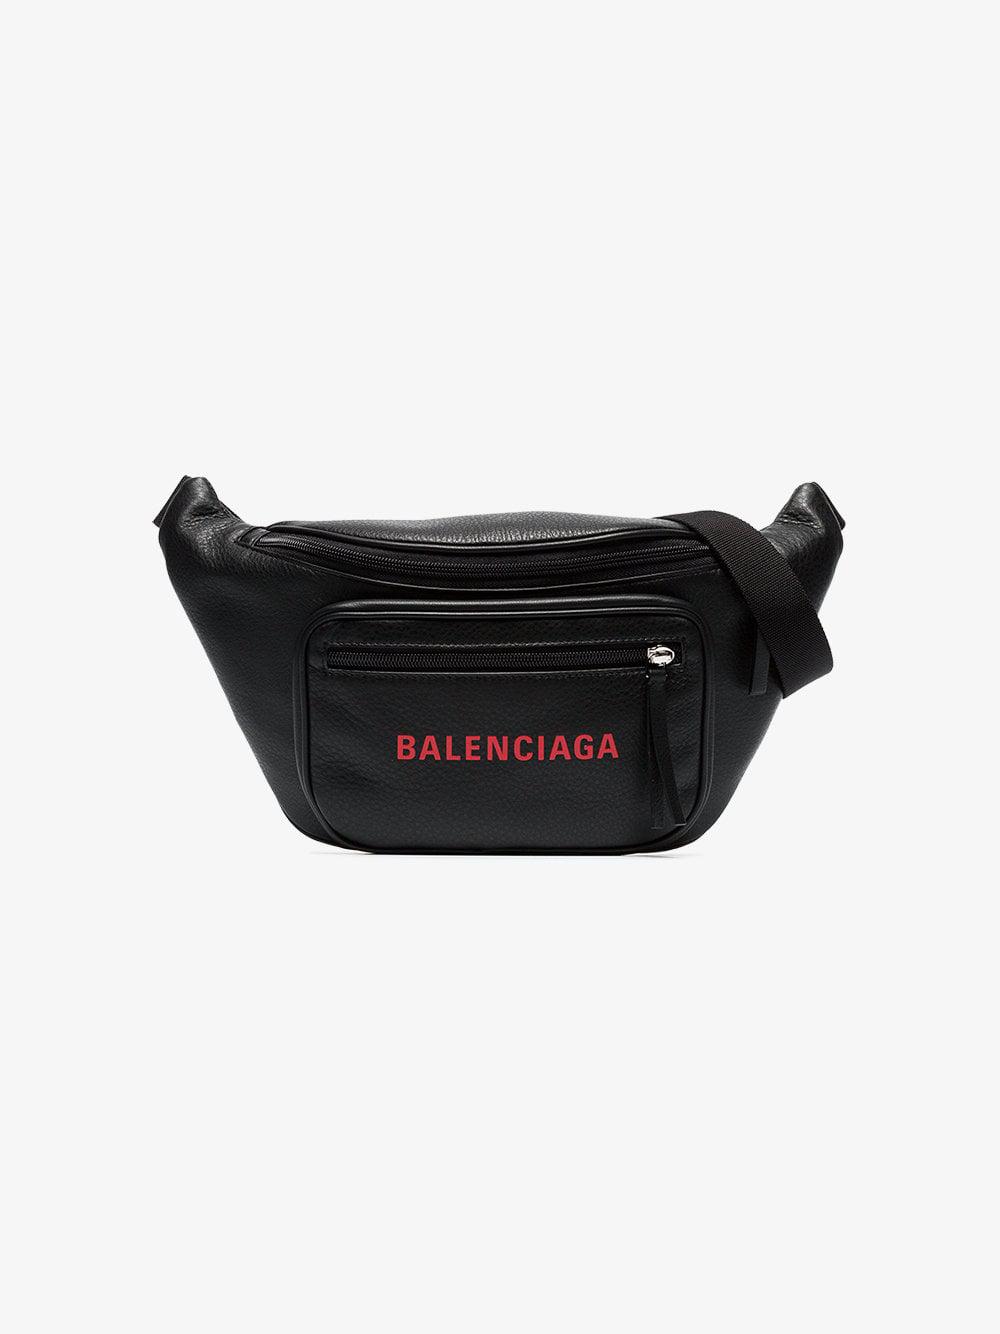 Balenciaga Black Red Logo Leather Cross Body Bag for Men | Lyst